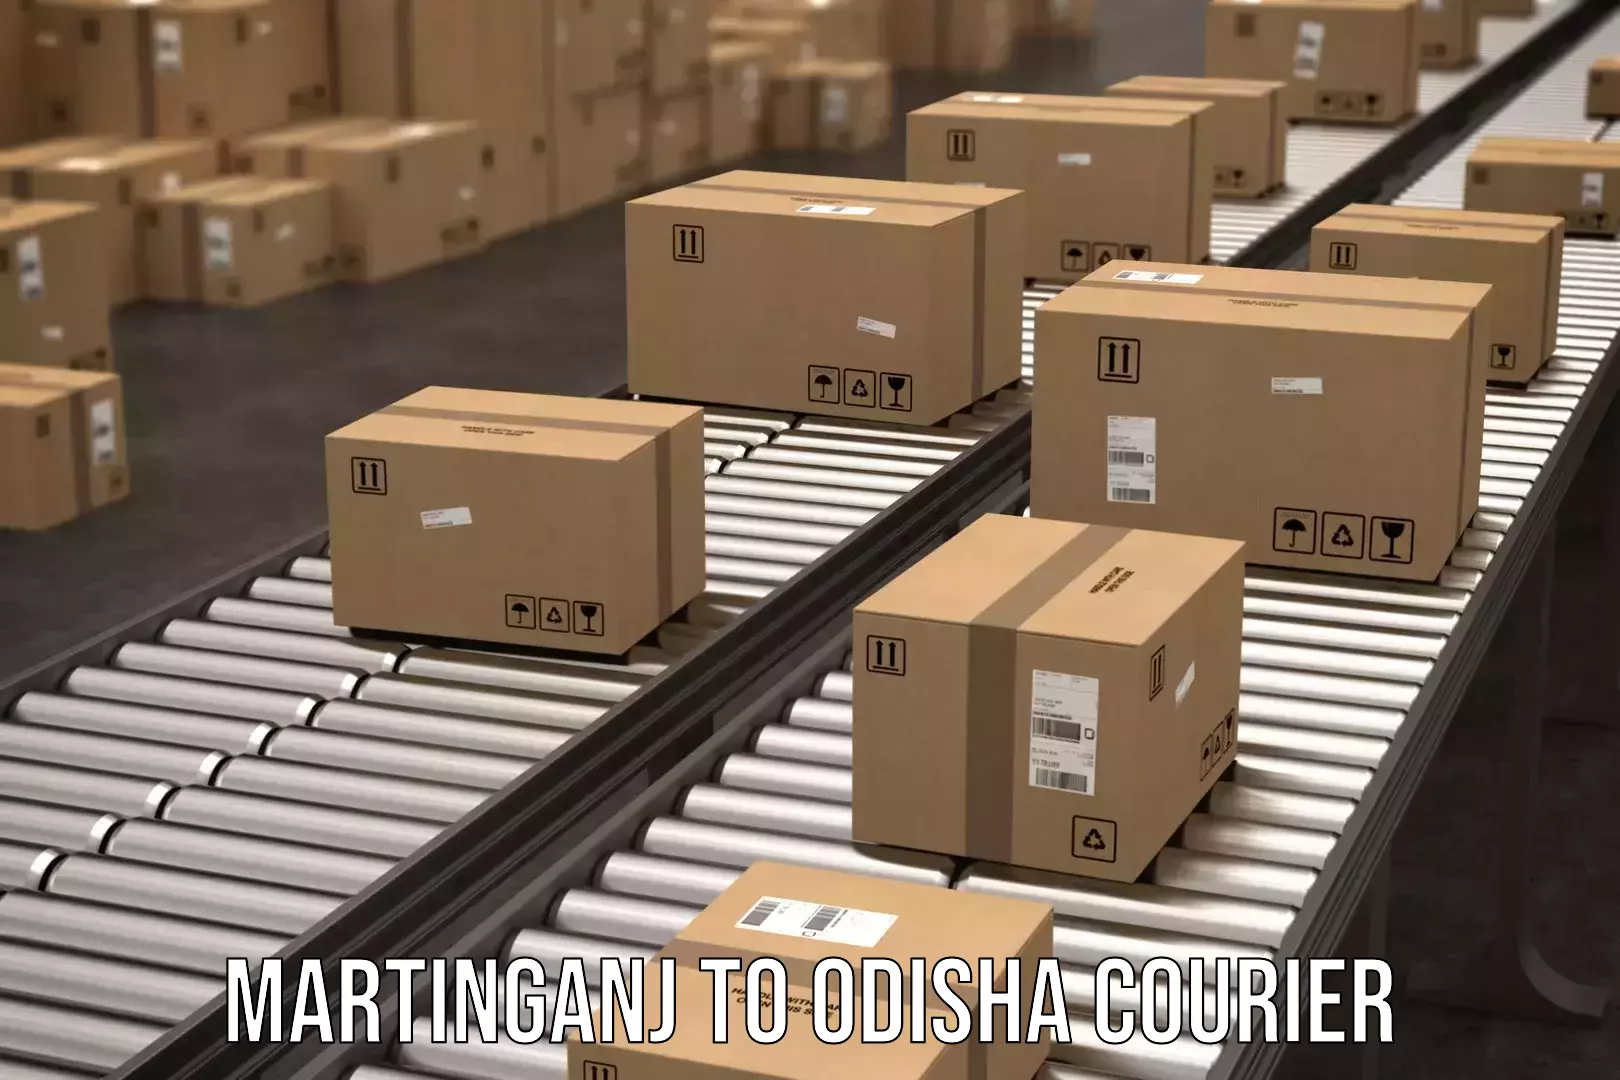 Logistics efficiency Martinganj to Dandisahi